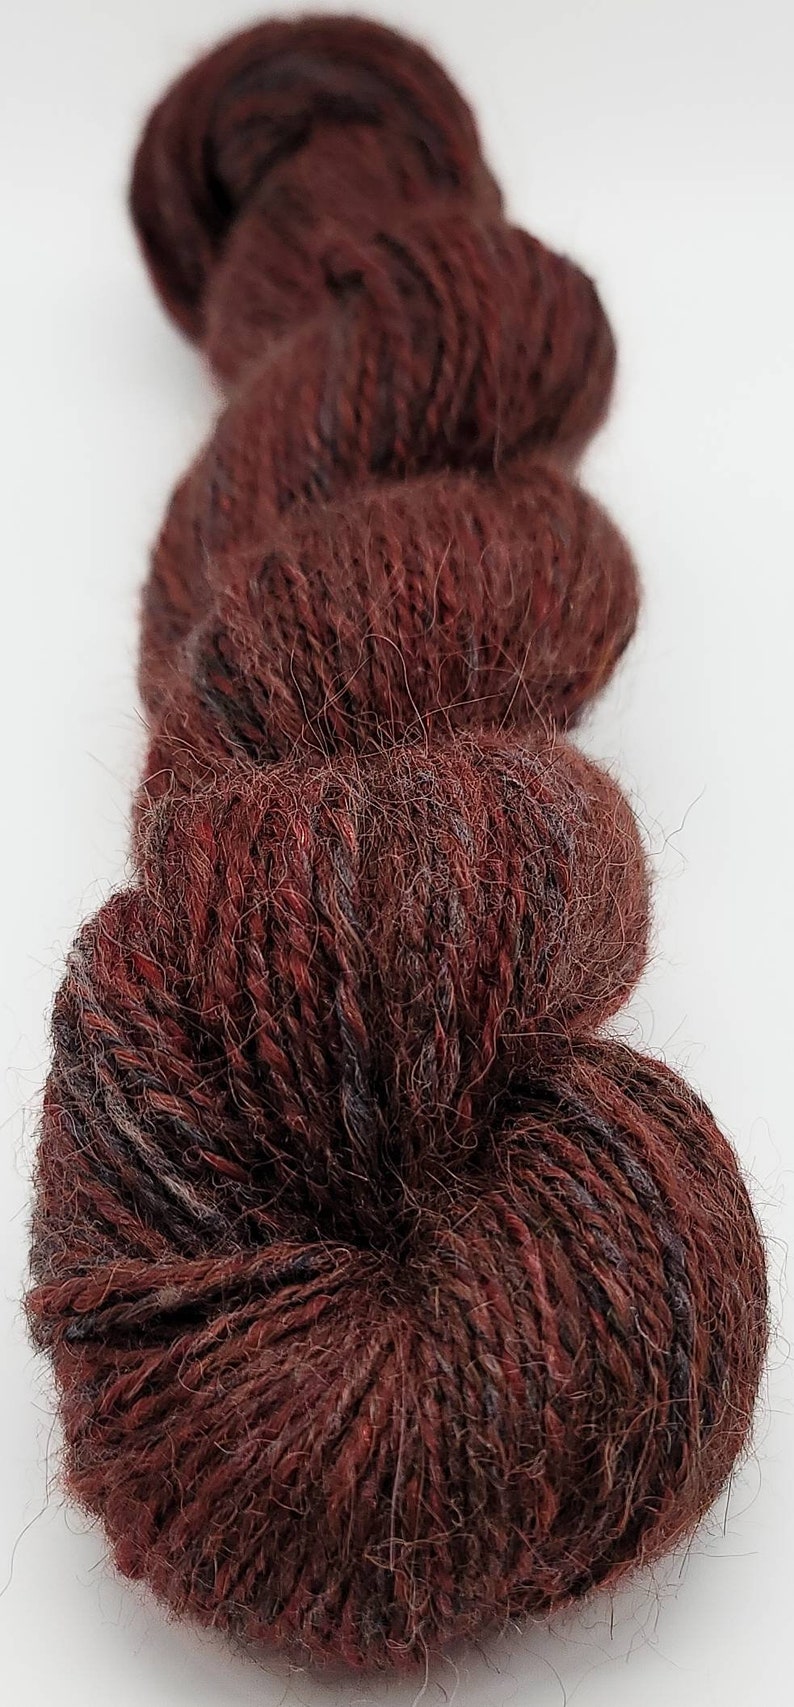 Handspun Yarn Hand Dyed Alpaca & Merino Wool 2 Ply DK Weight Yarn Grey and Red 185 Yards HS5 image 5